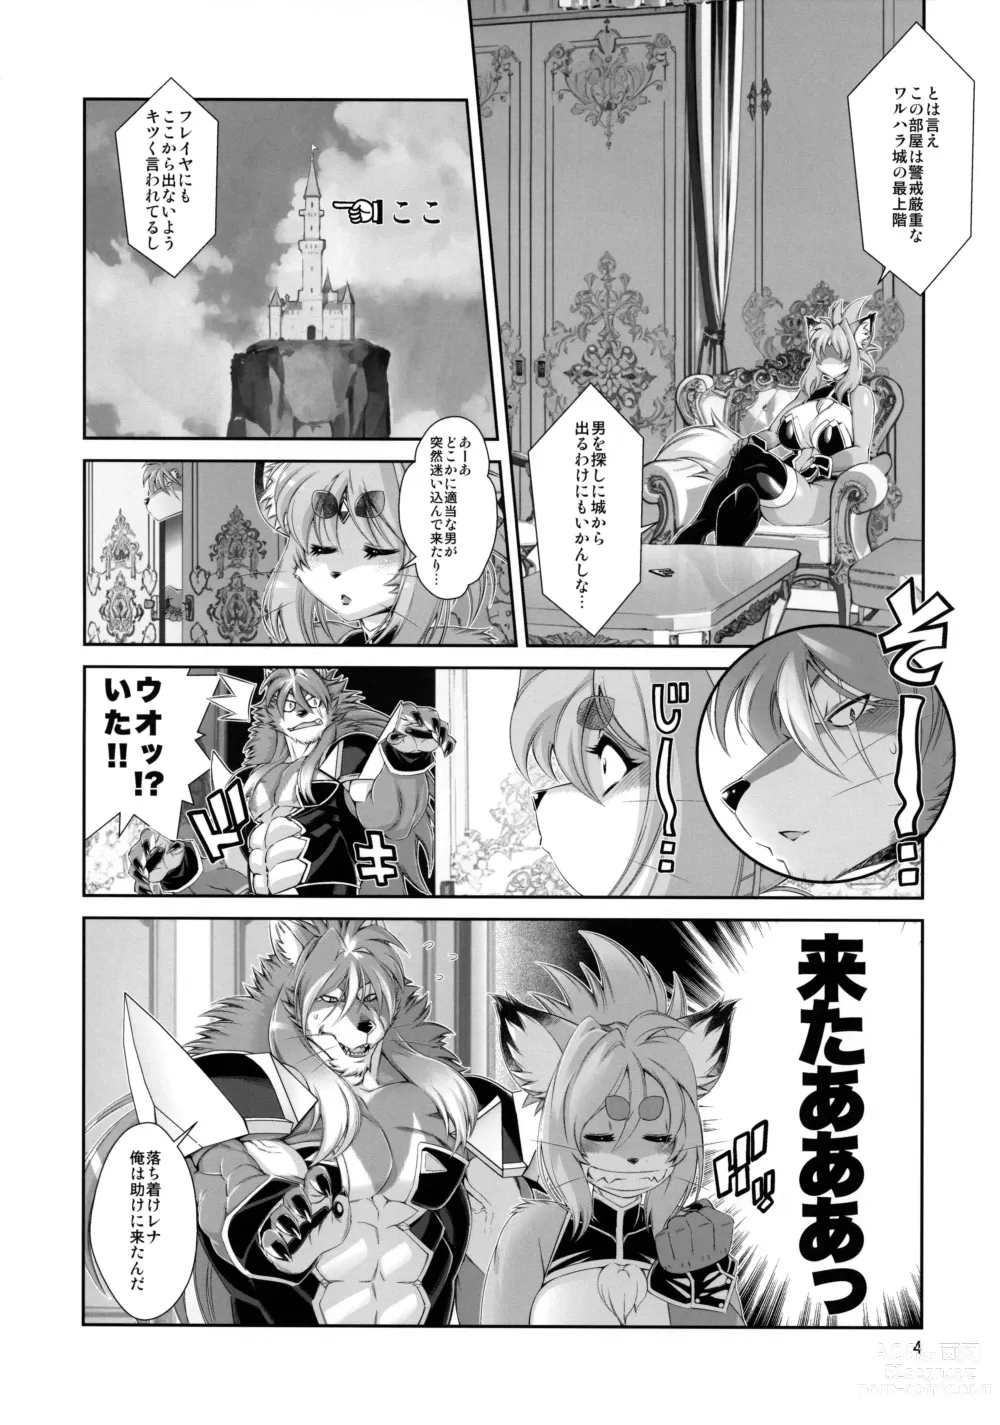 Page 5 of doujinshi Mahou no Juujin Foxy Rena 19